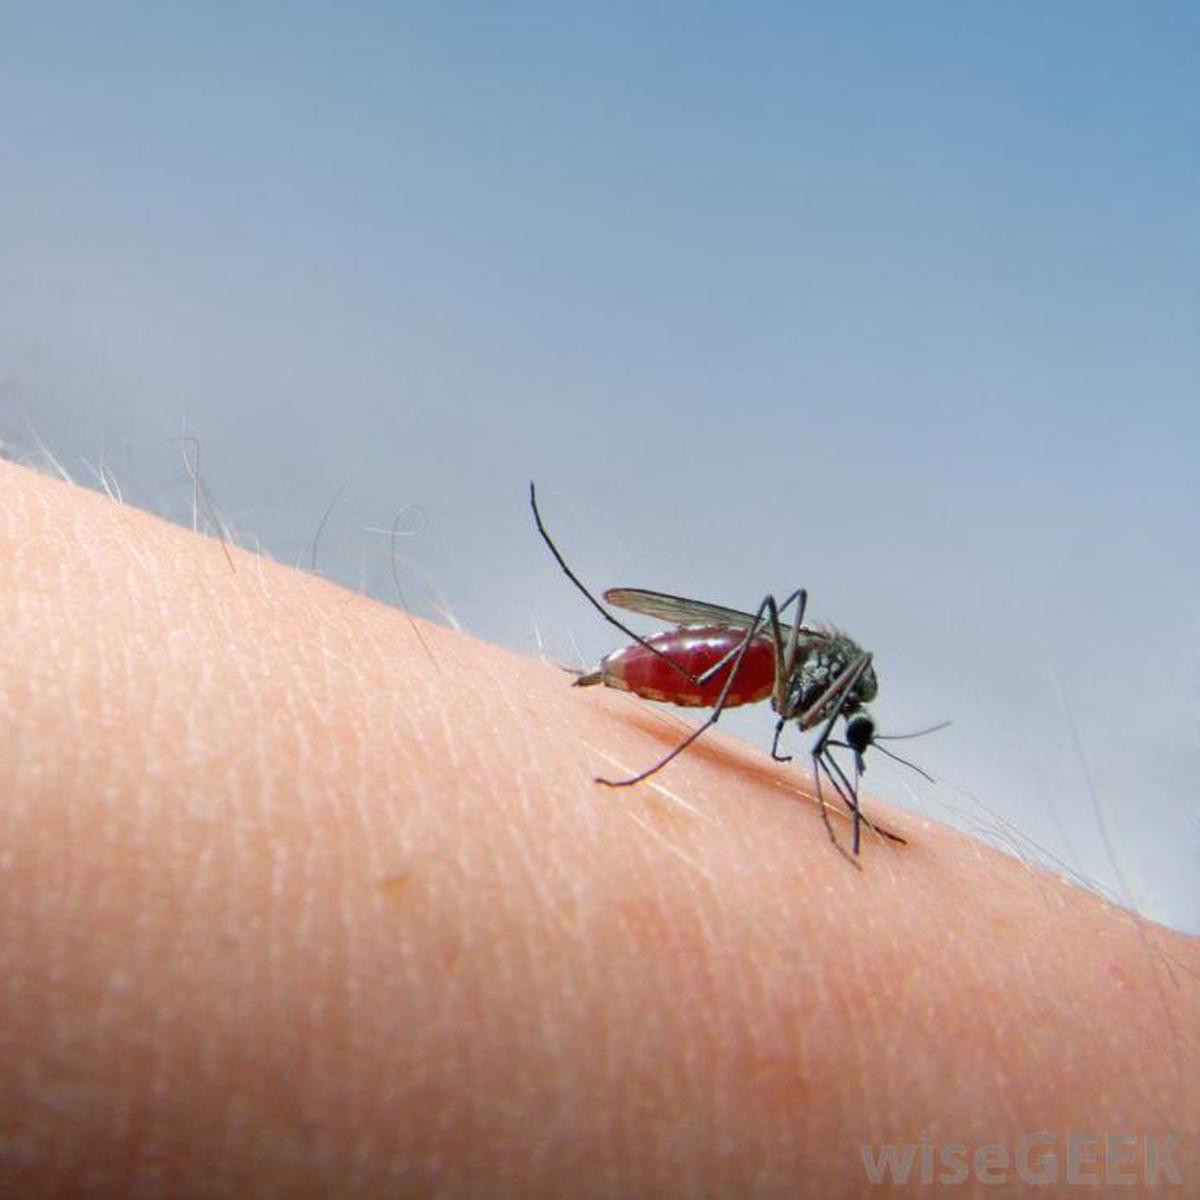 Berapa lama daur hidup nyamuk